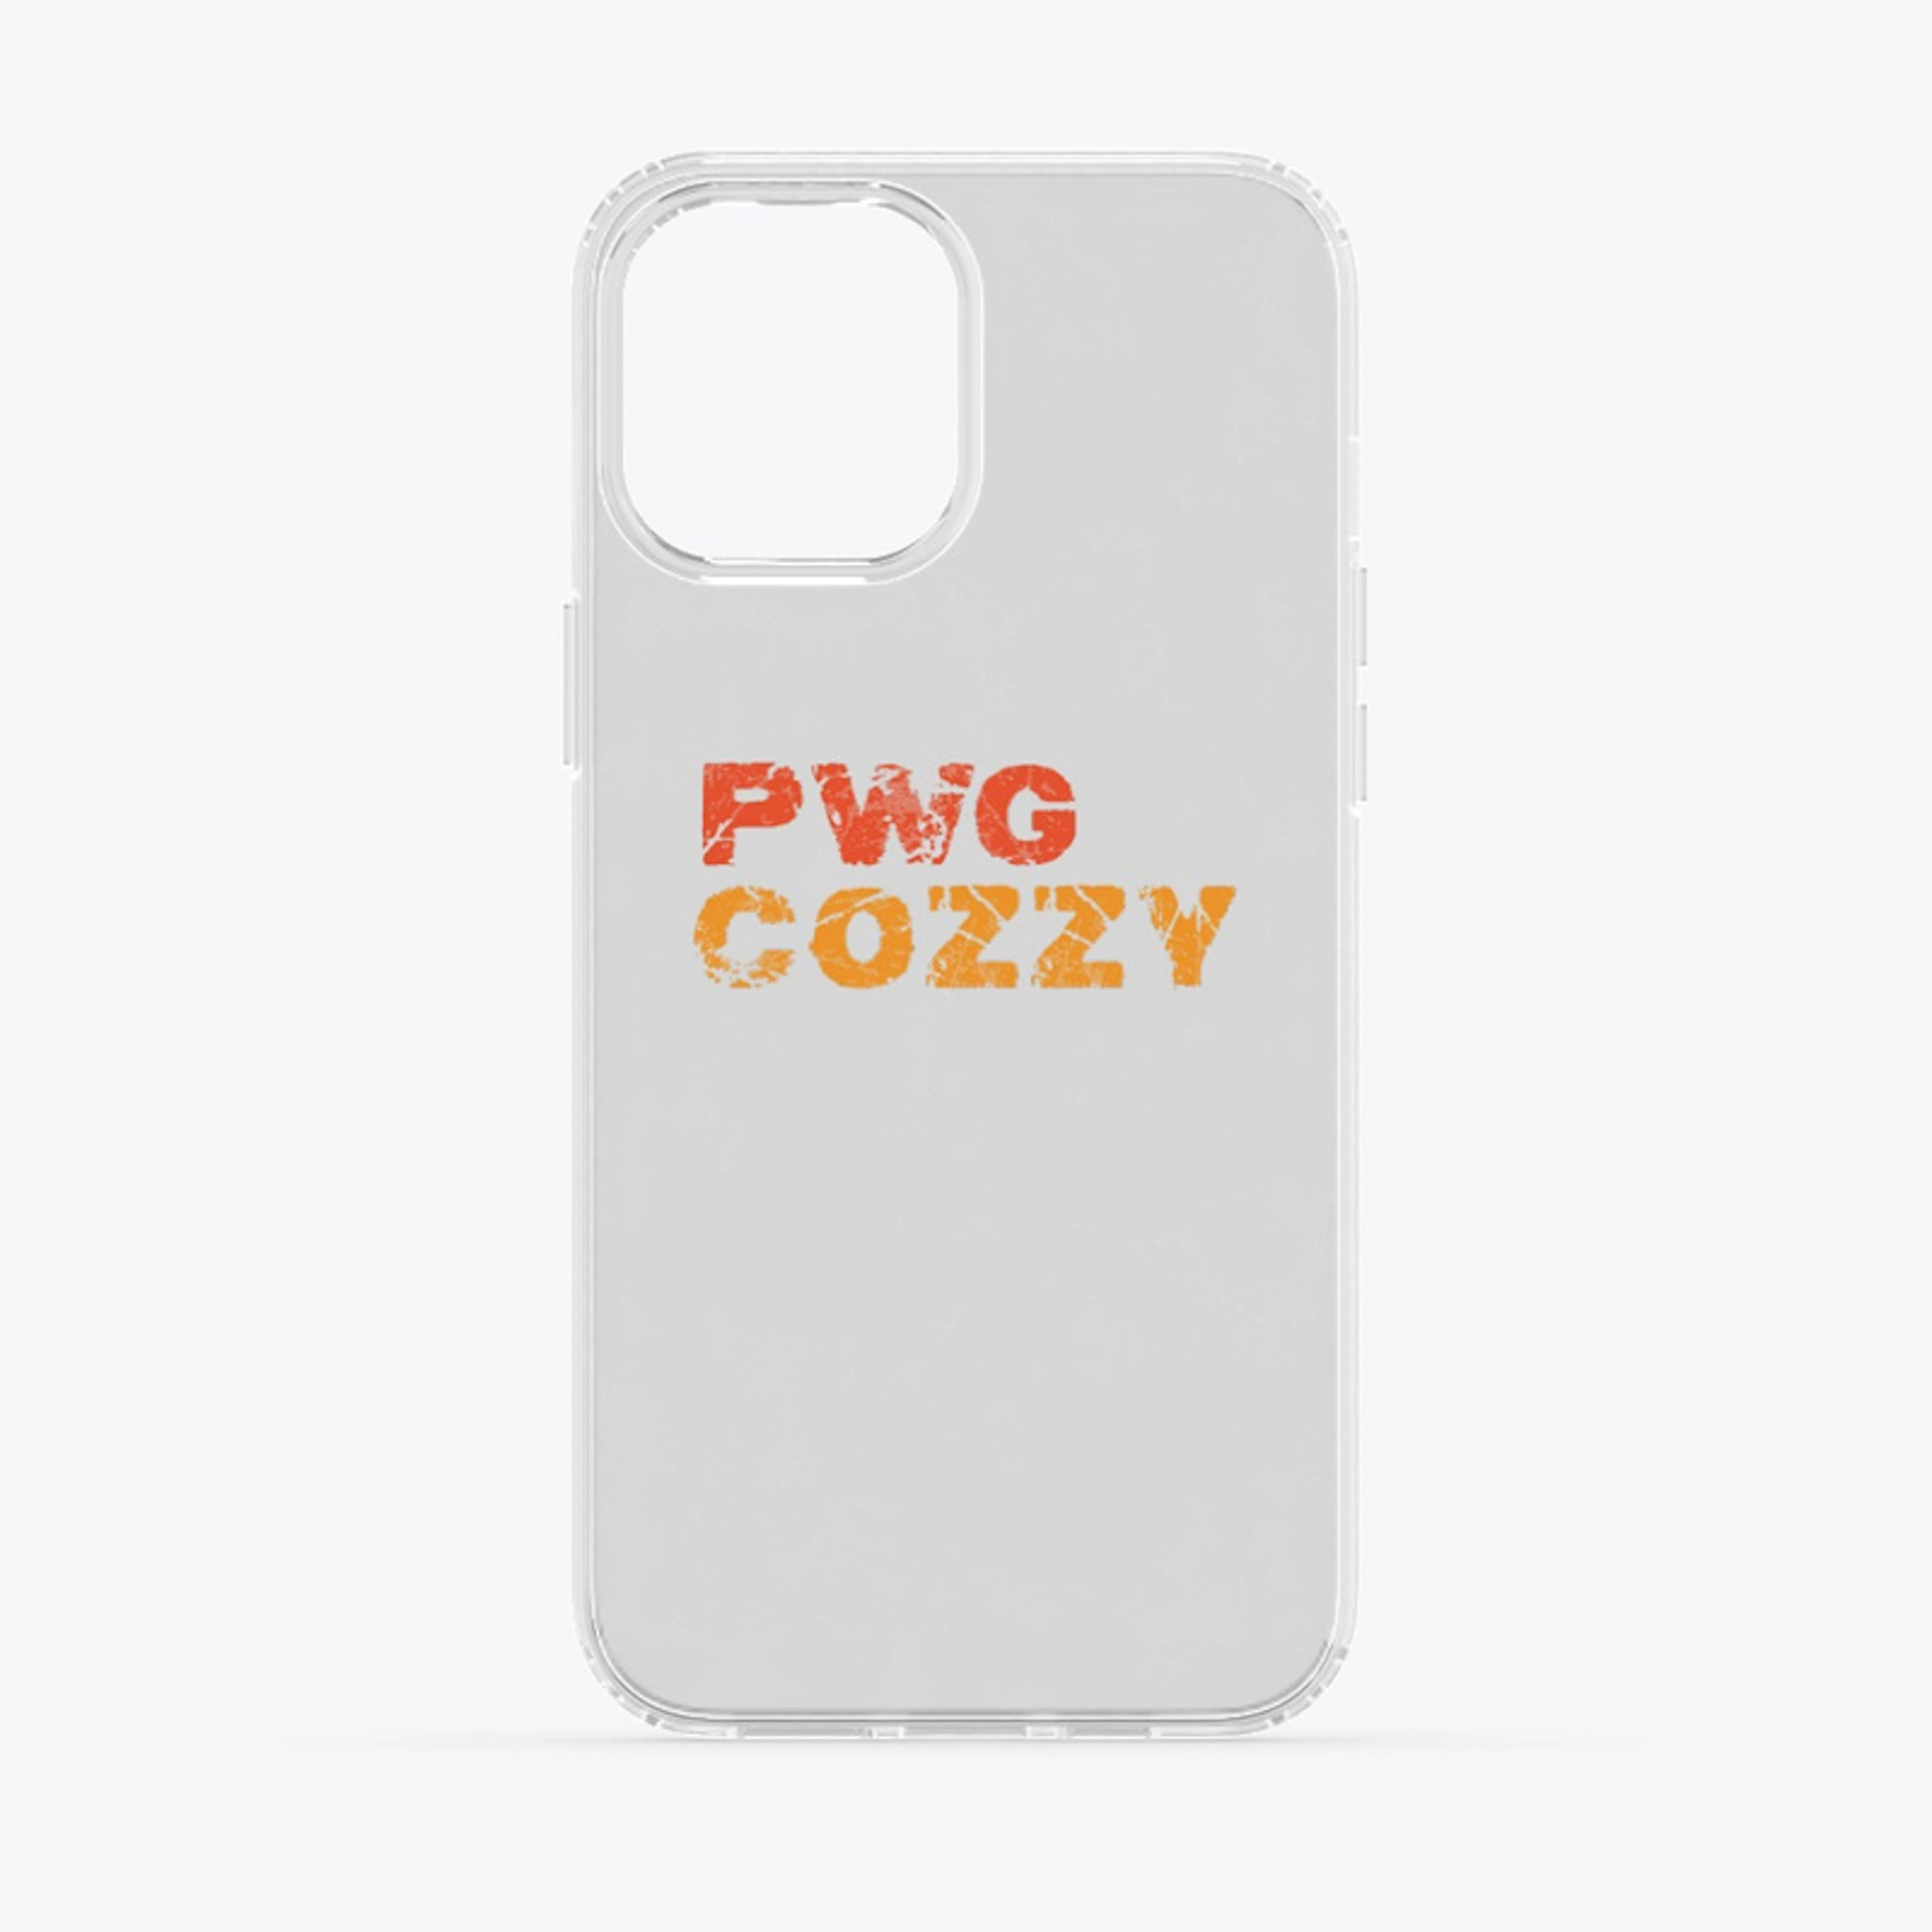 PWG Cozzy iphone case